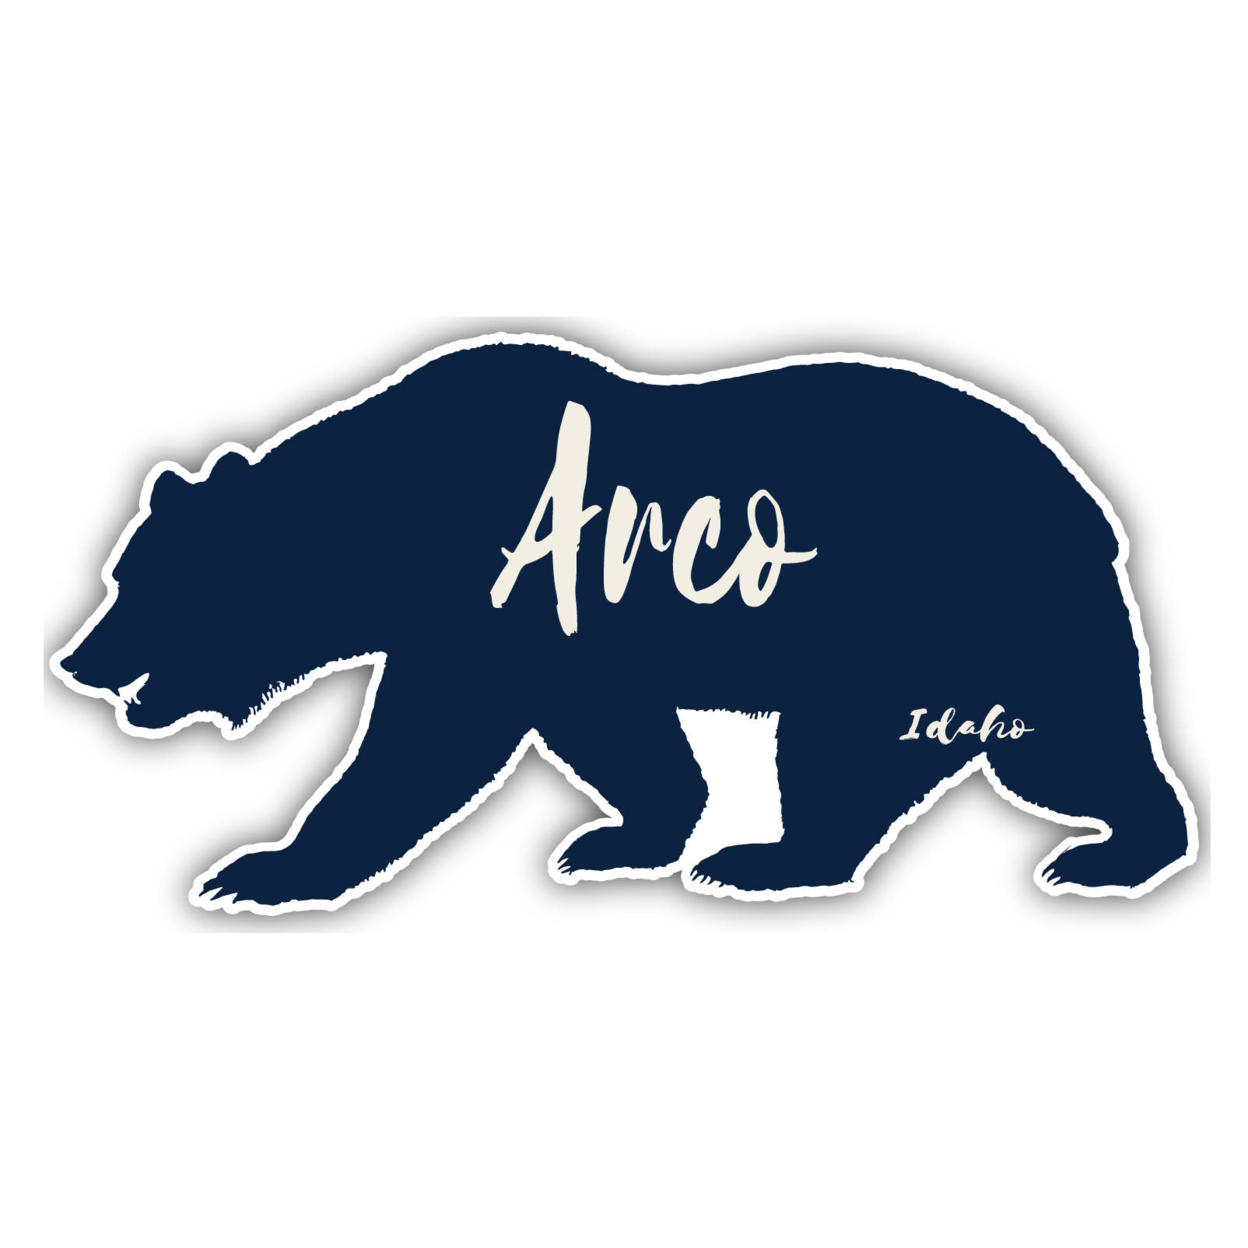 Arco Idaho Souvenir Decorative Stickers (Choose Theme And Size) - Single Unit, 6-Inch, Bear